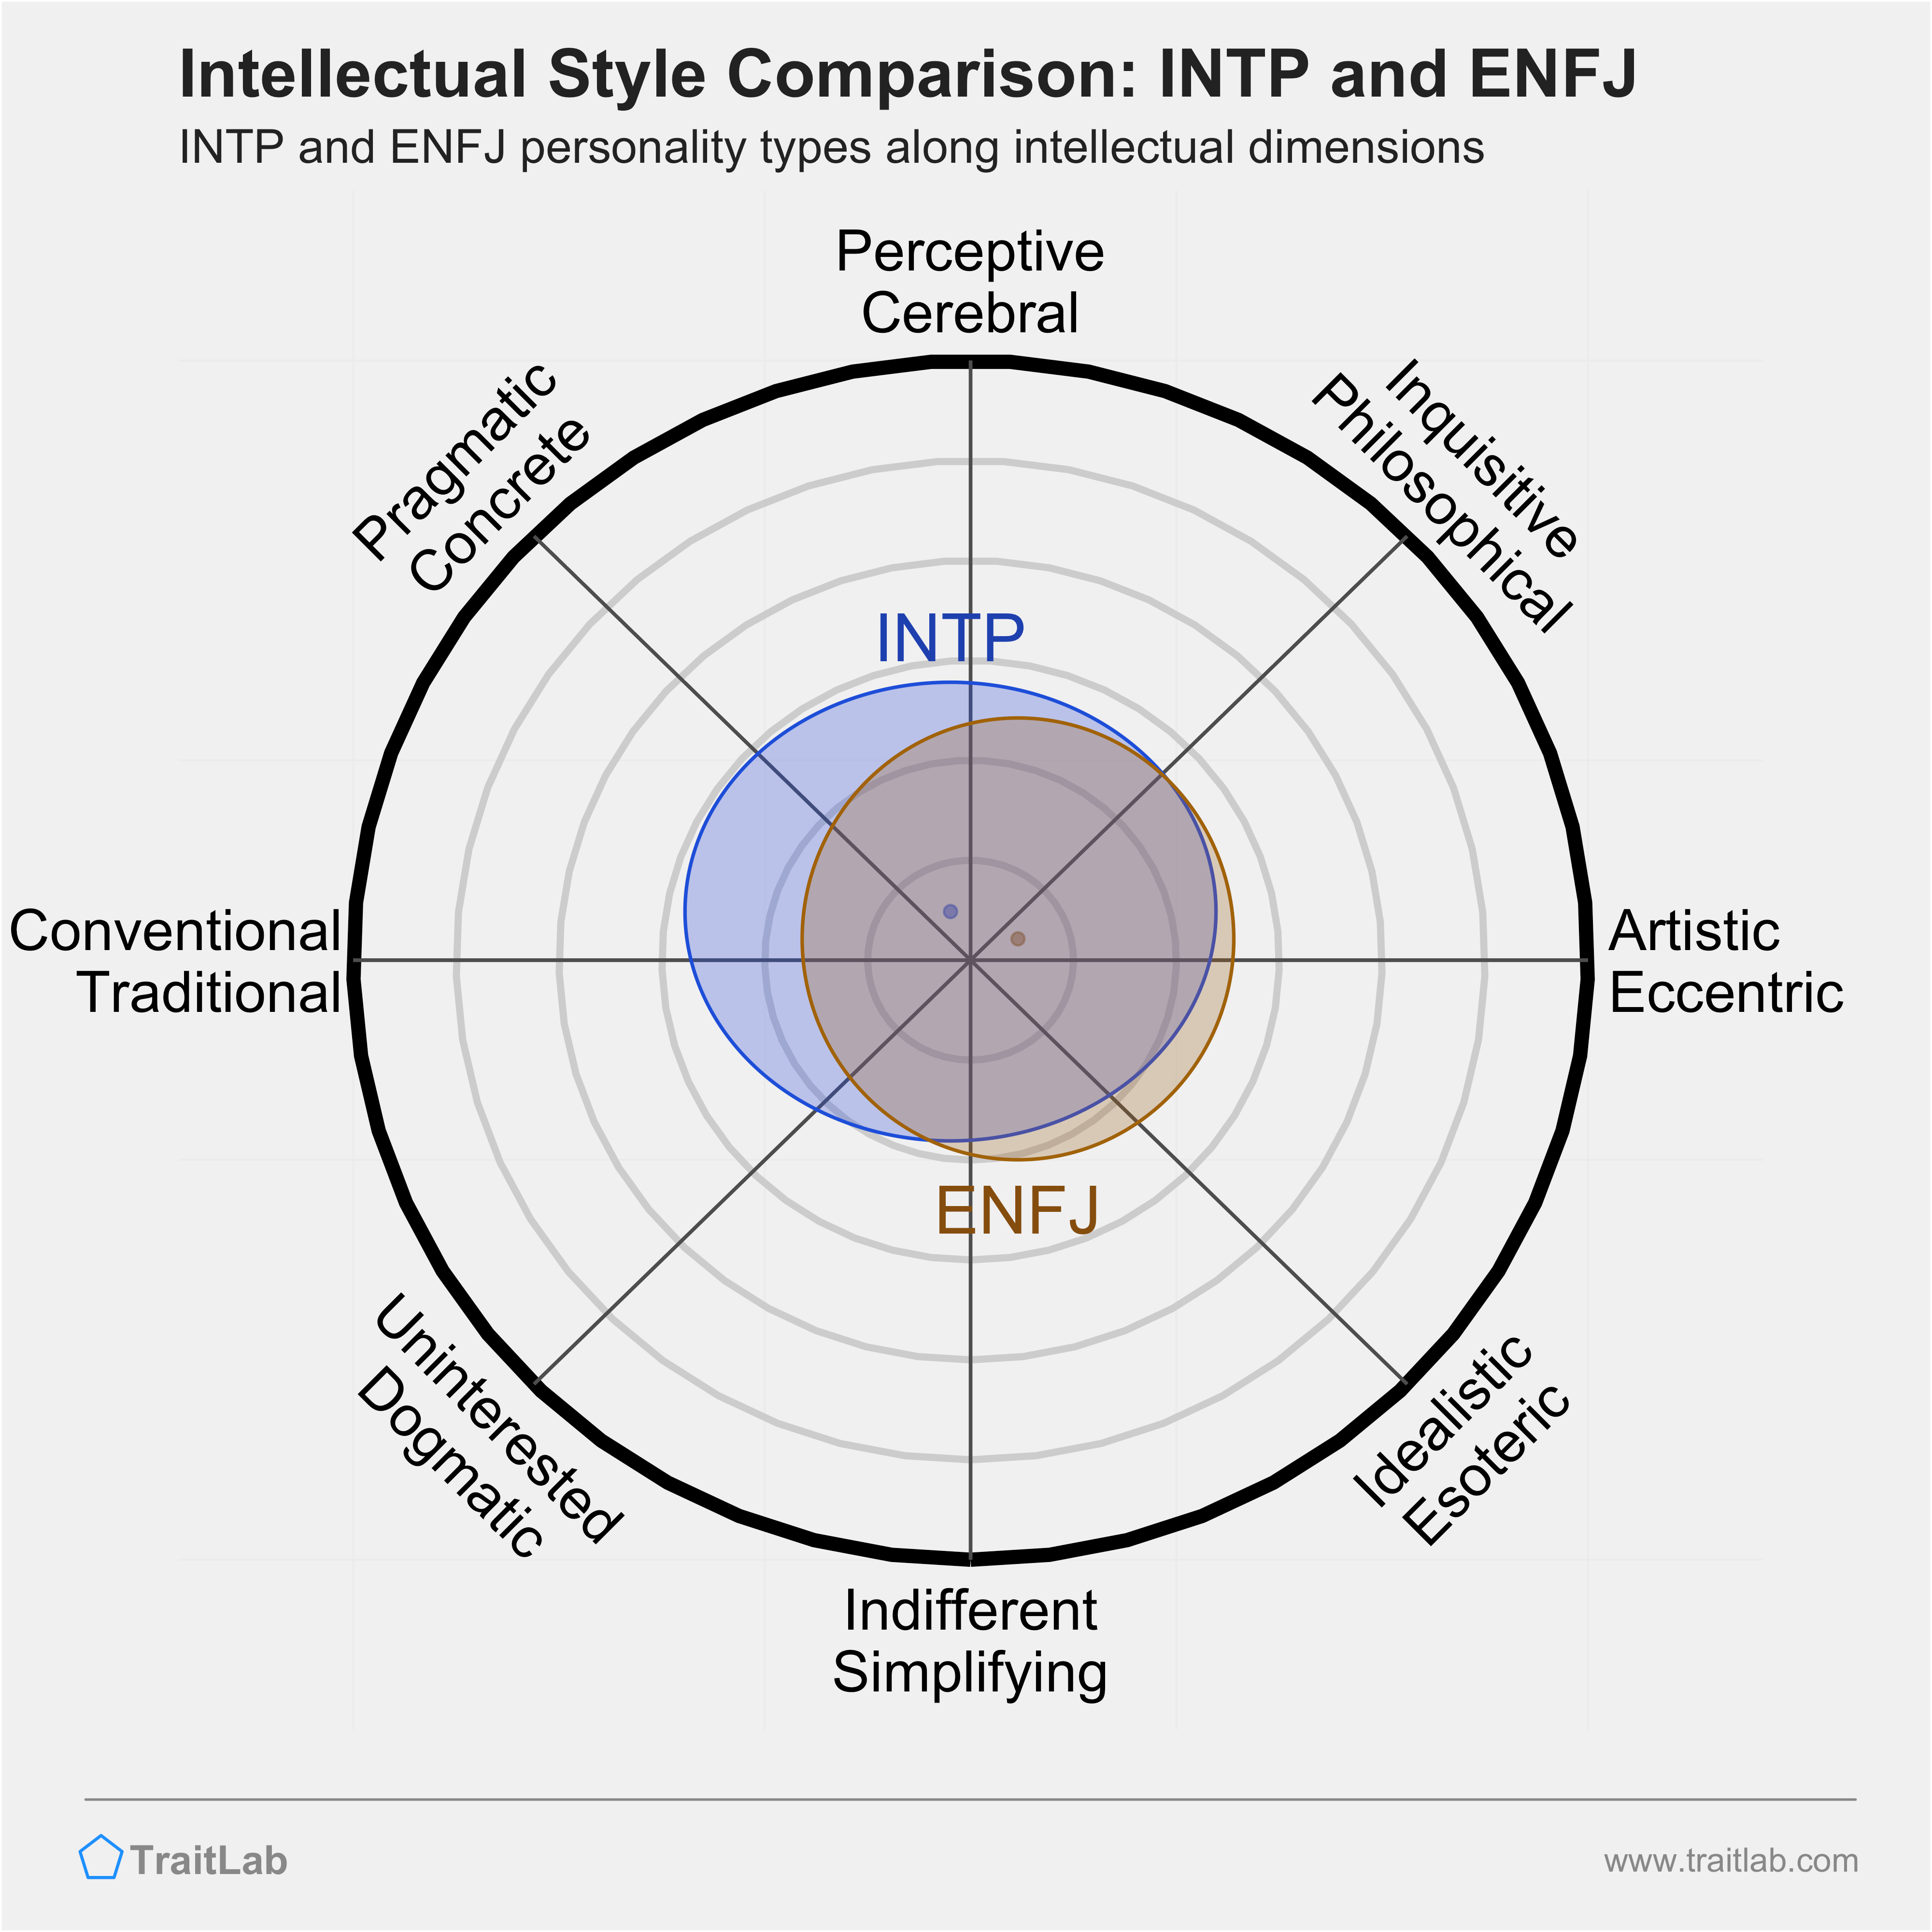 INTP and ENFJ comparison across intellectual dimensions